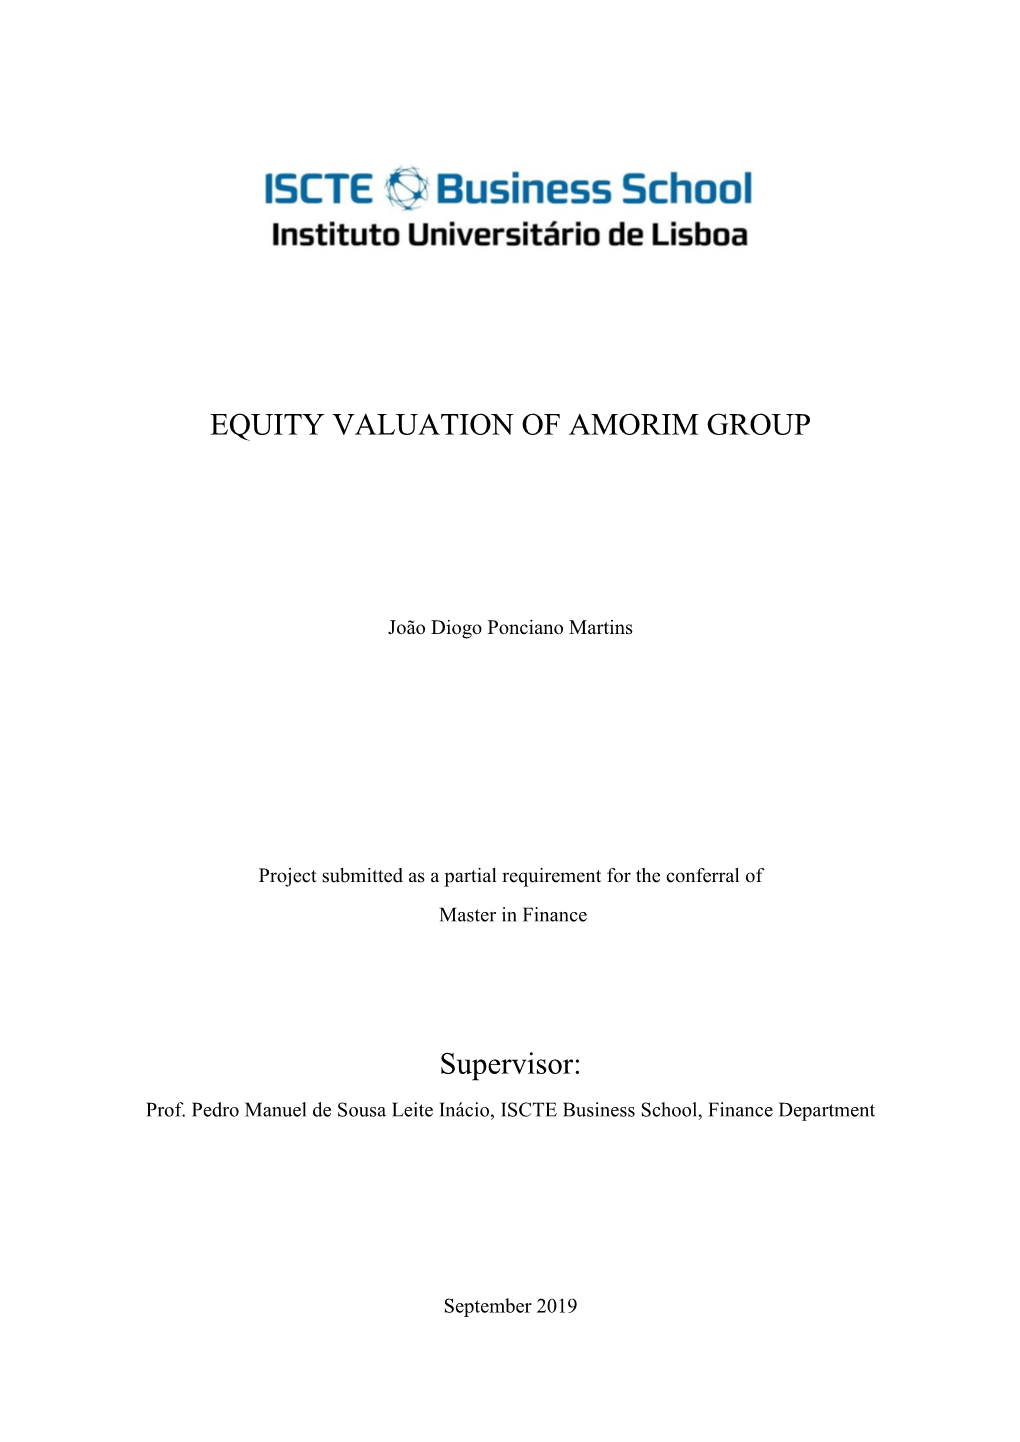 EQUITY VALUATION of AMORIM GROUP Supervisor